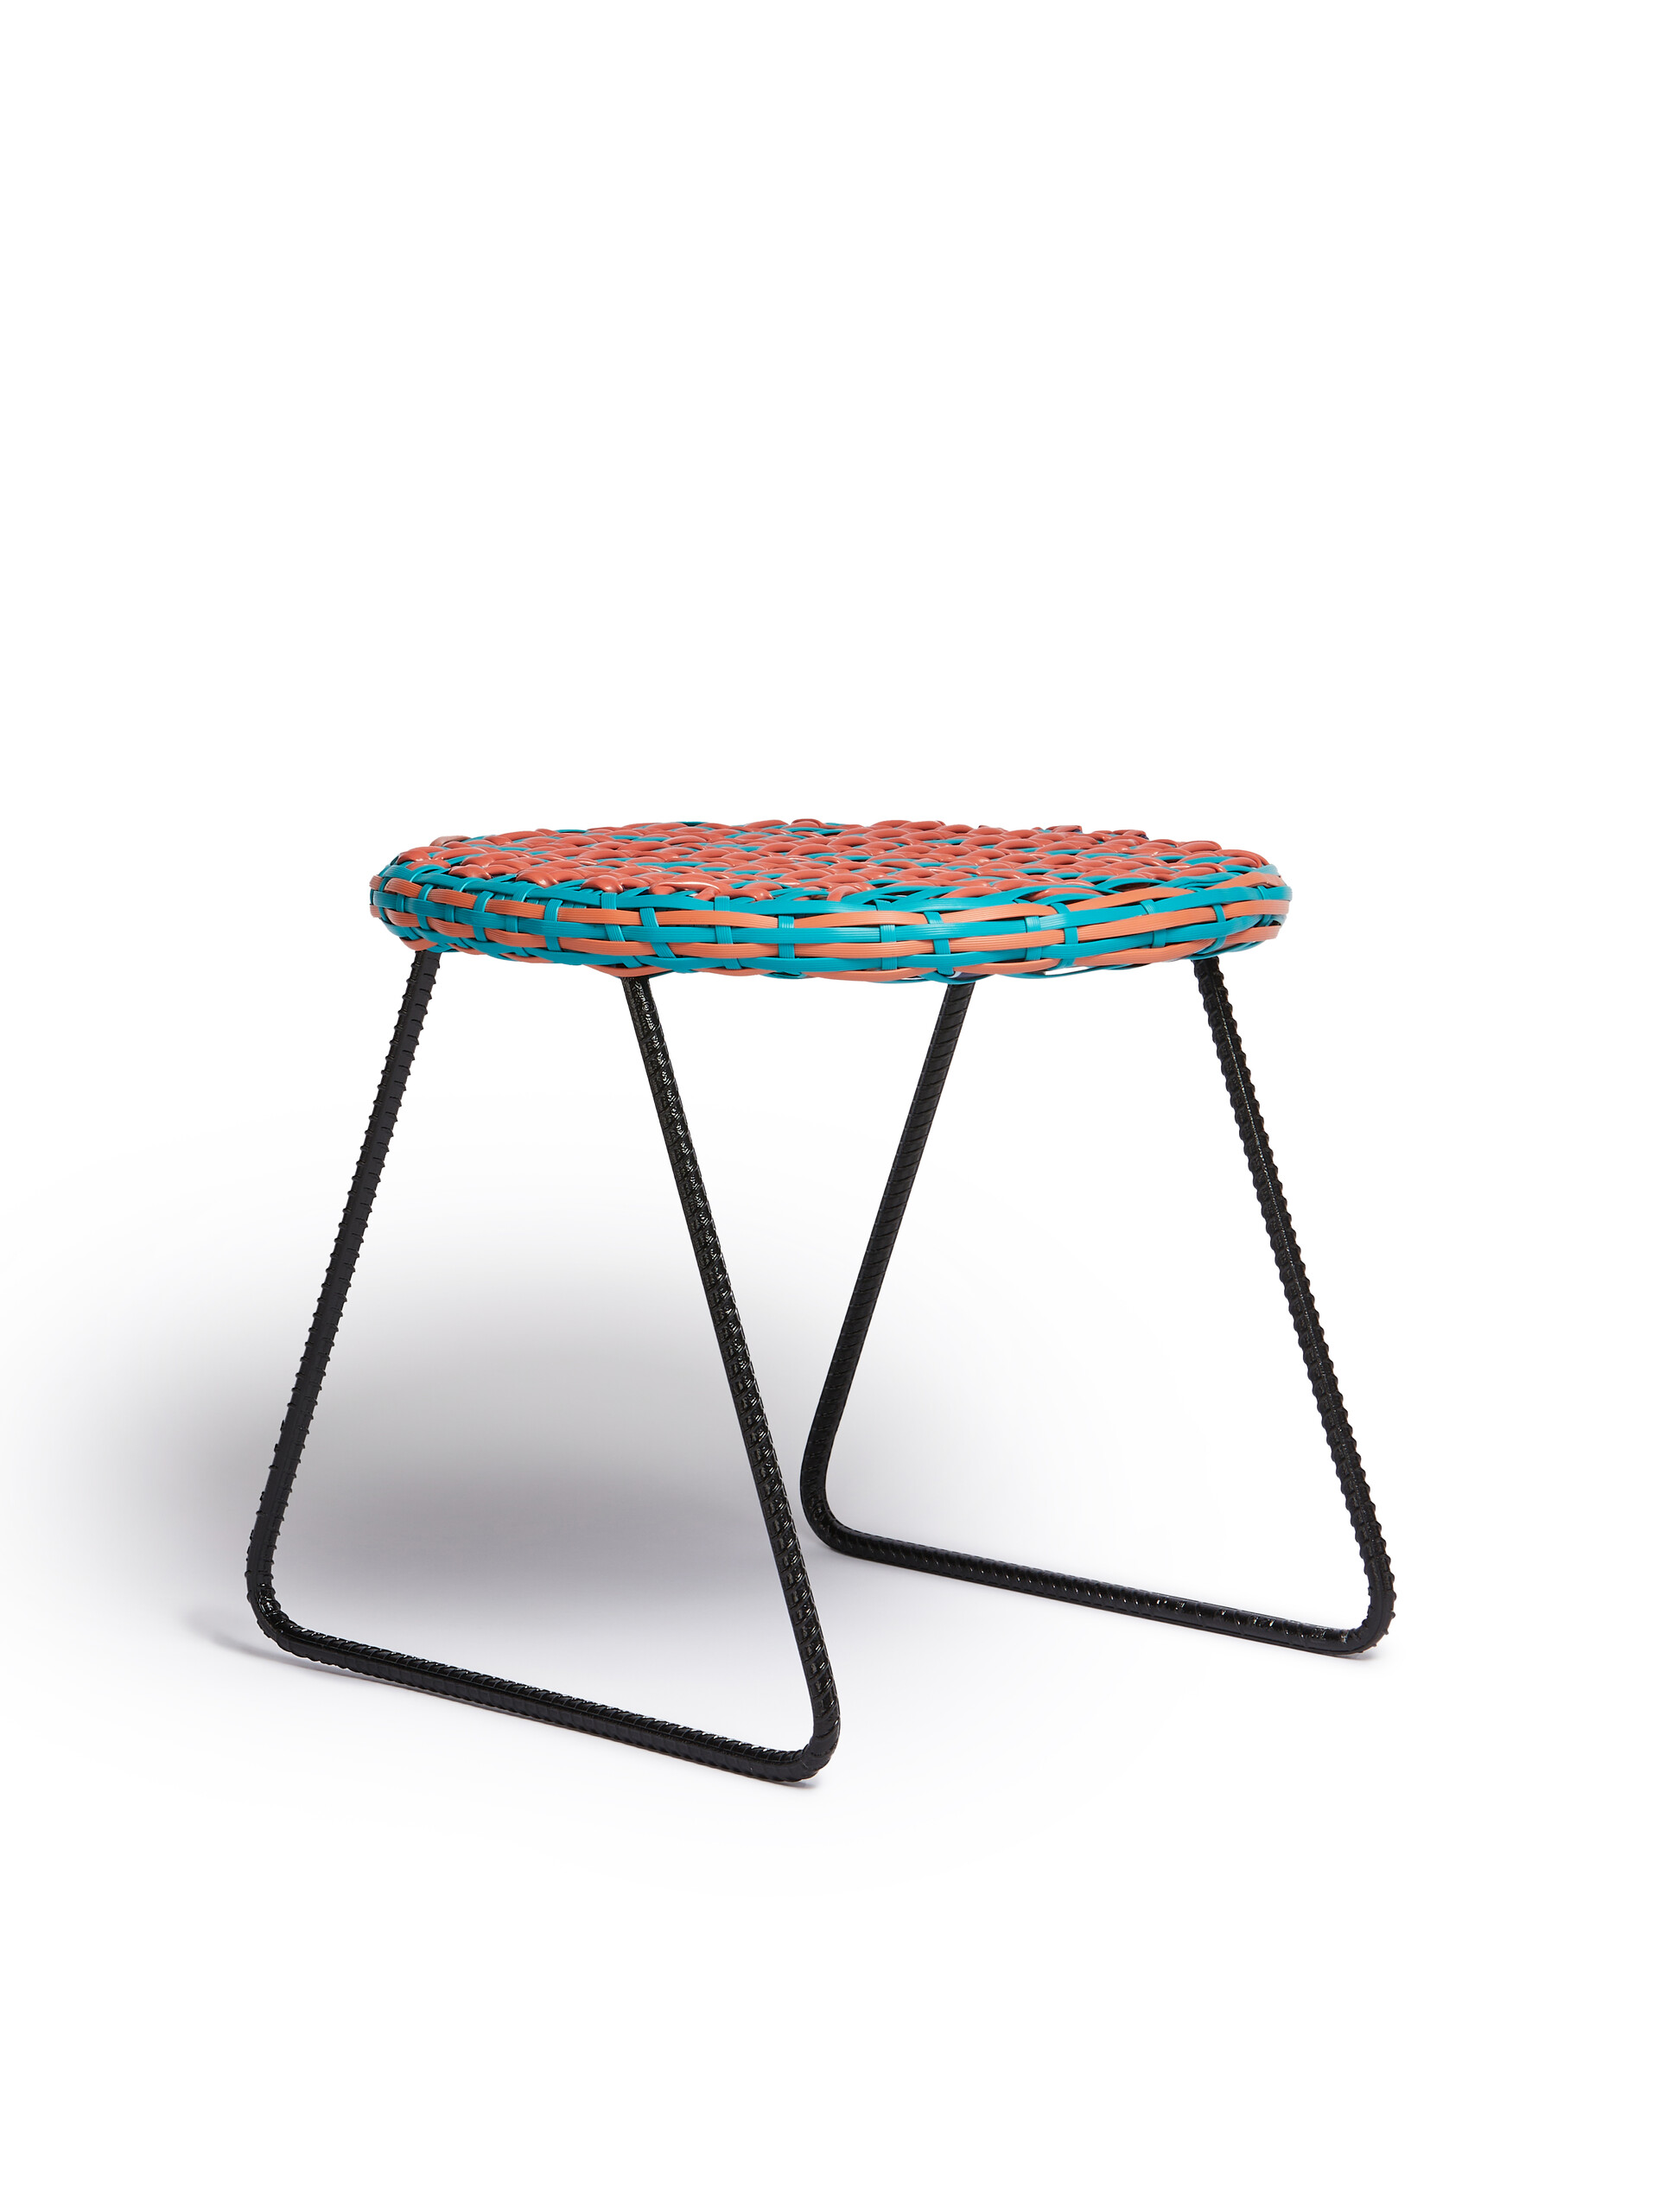 Blue and pink MARNI MARKET stool - Furniture - Image 2